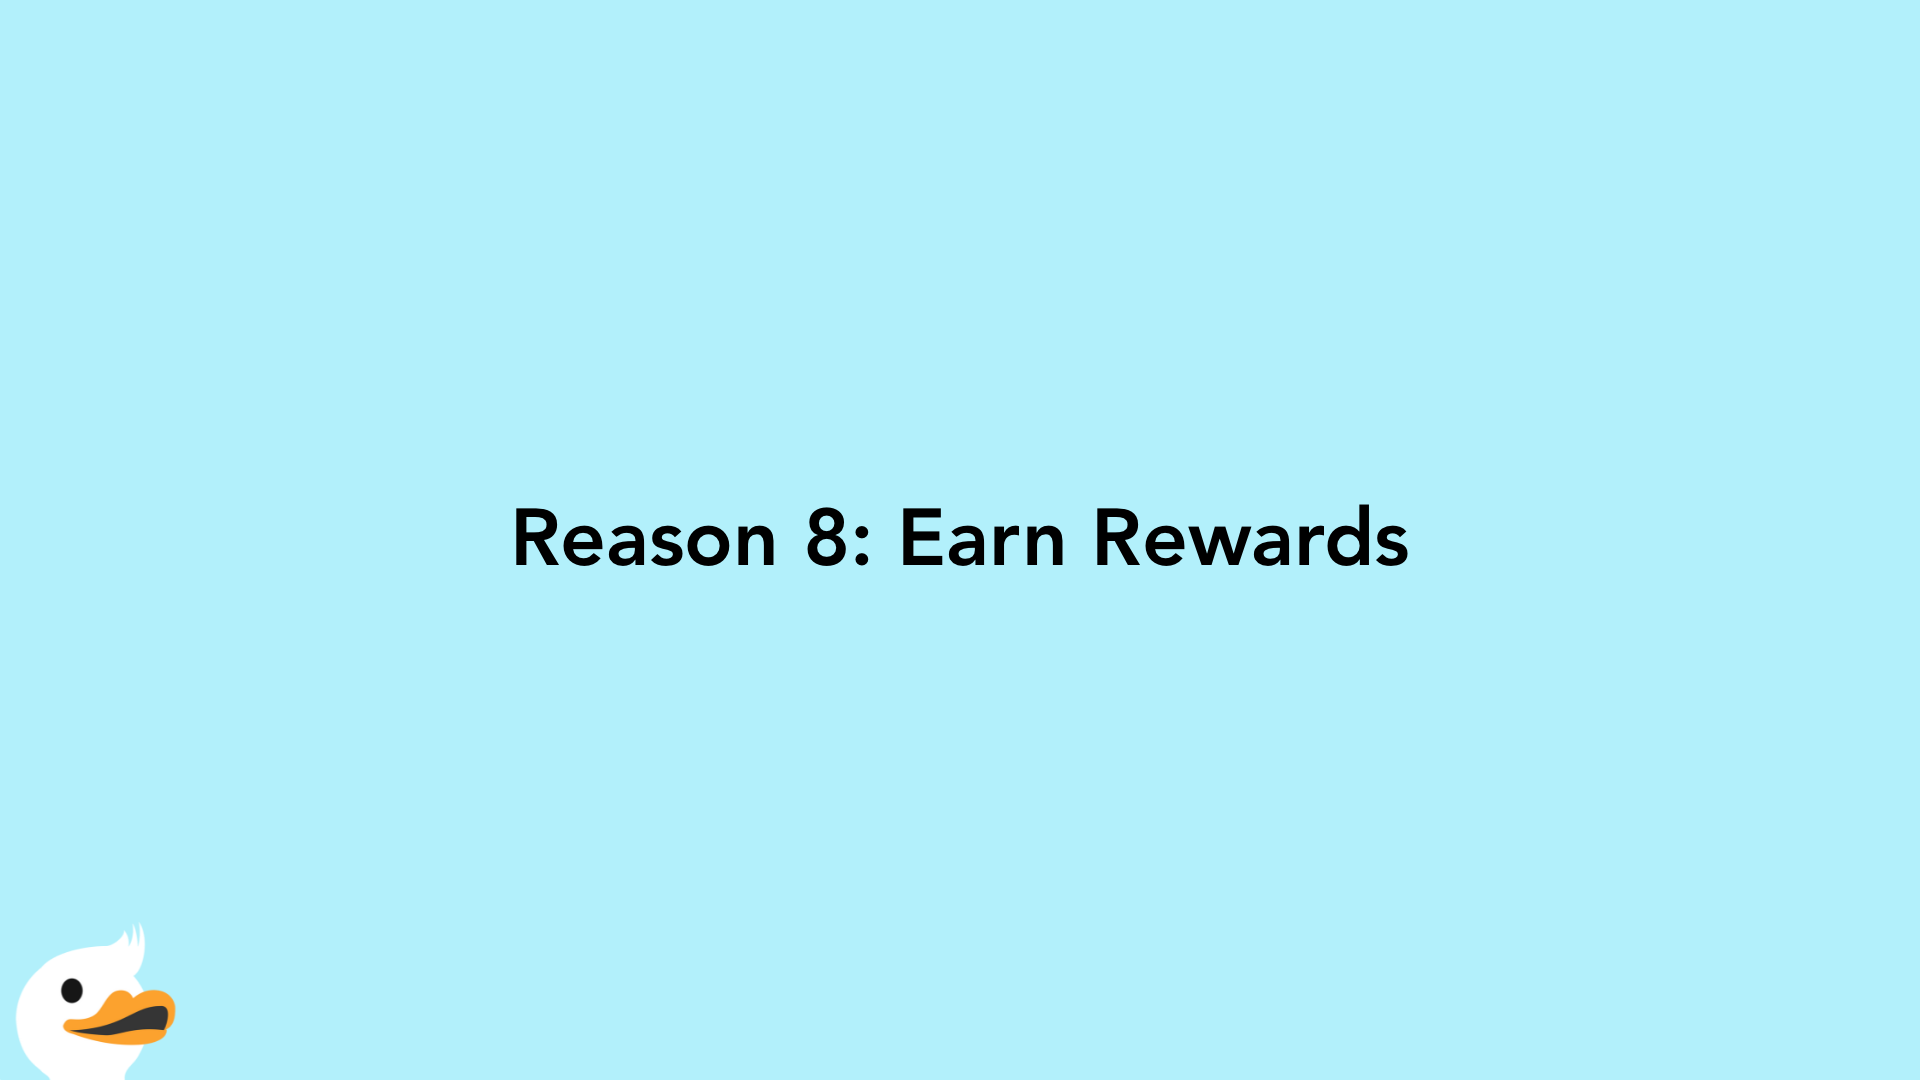 Reason 8: Earn Rewards